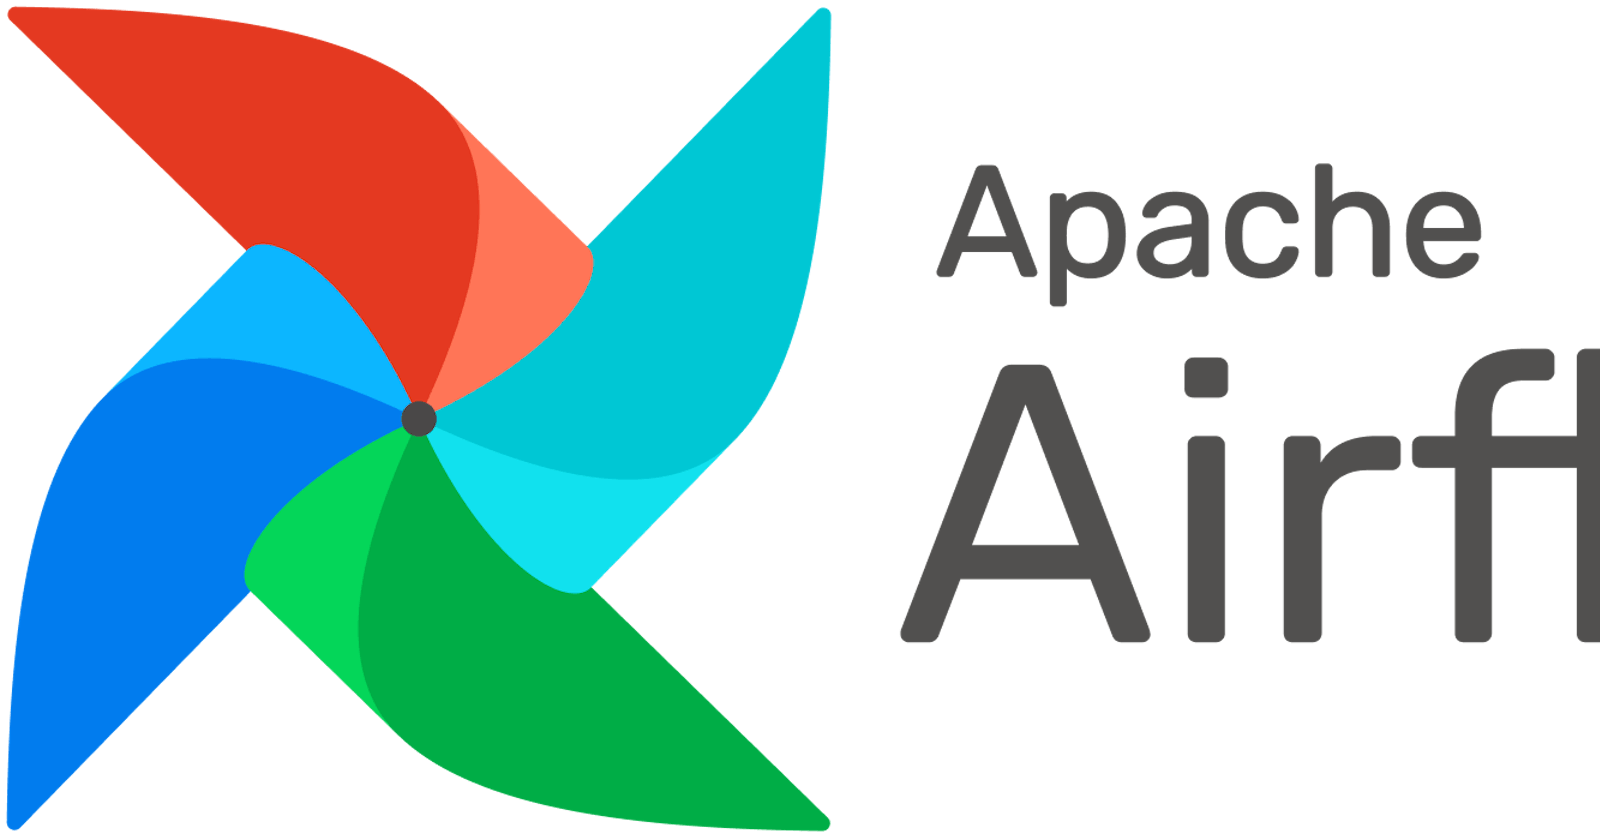 Managing ETLs with Apache AirFlow - Introduction Part 1